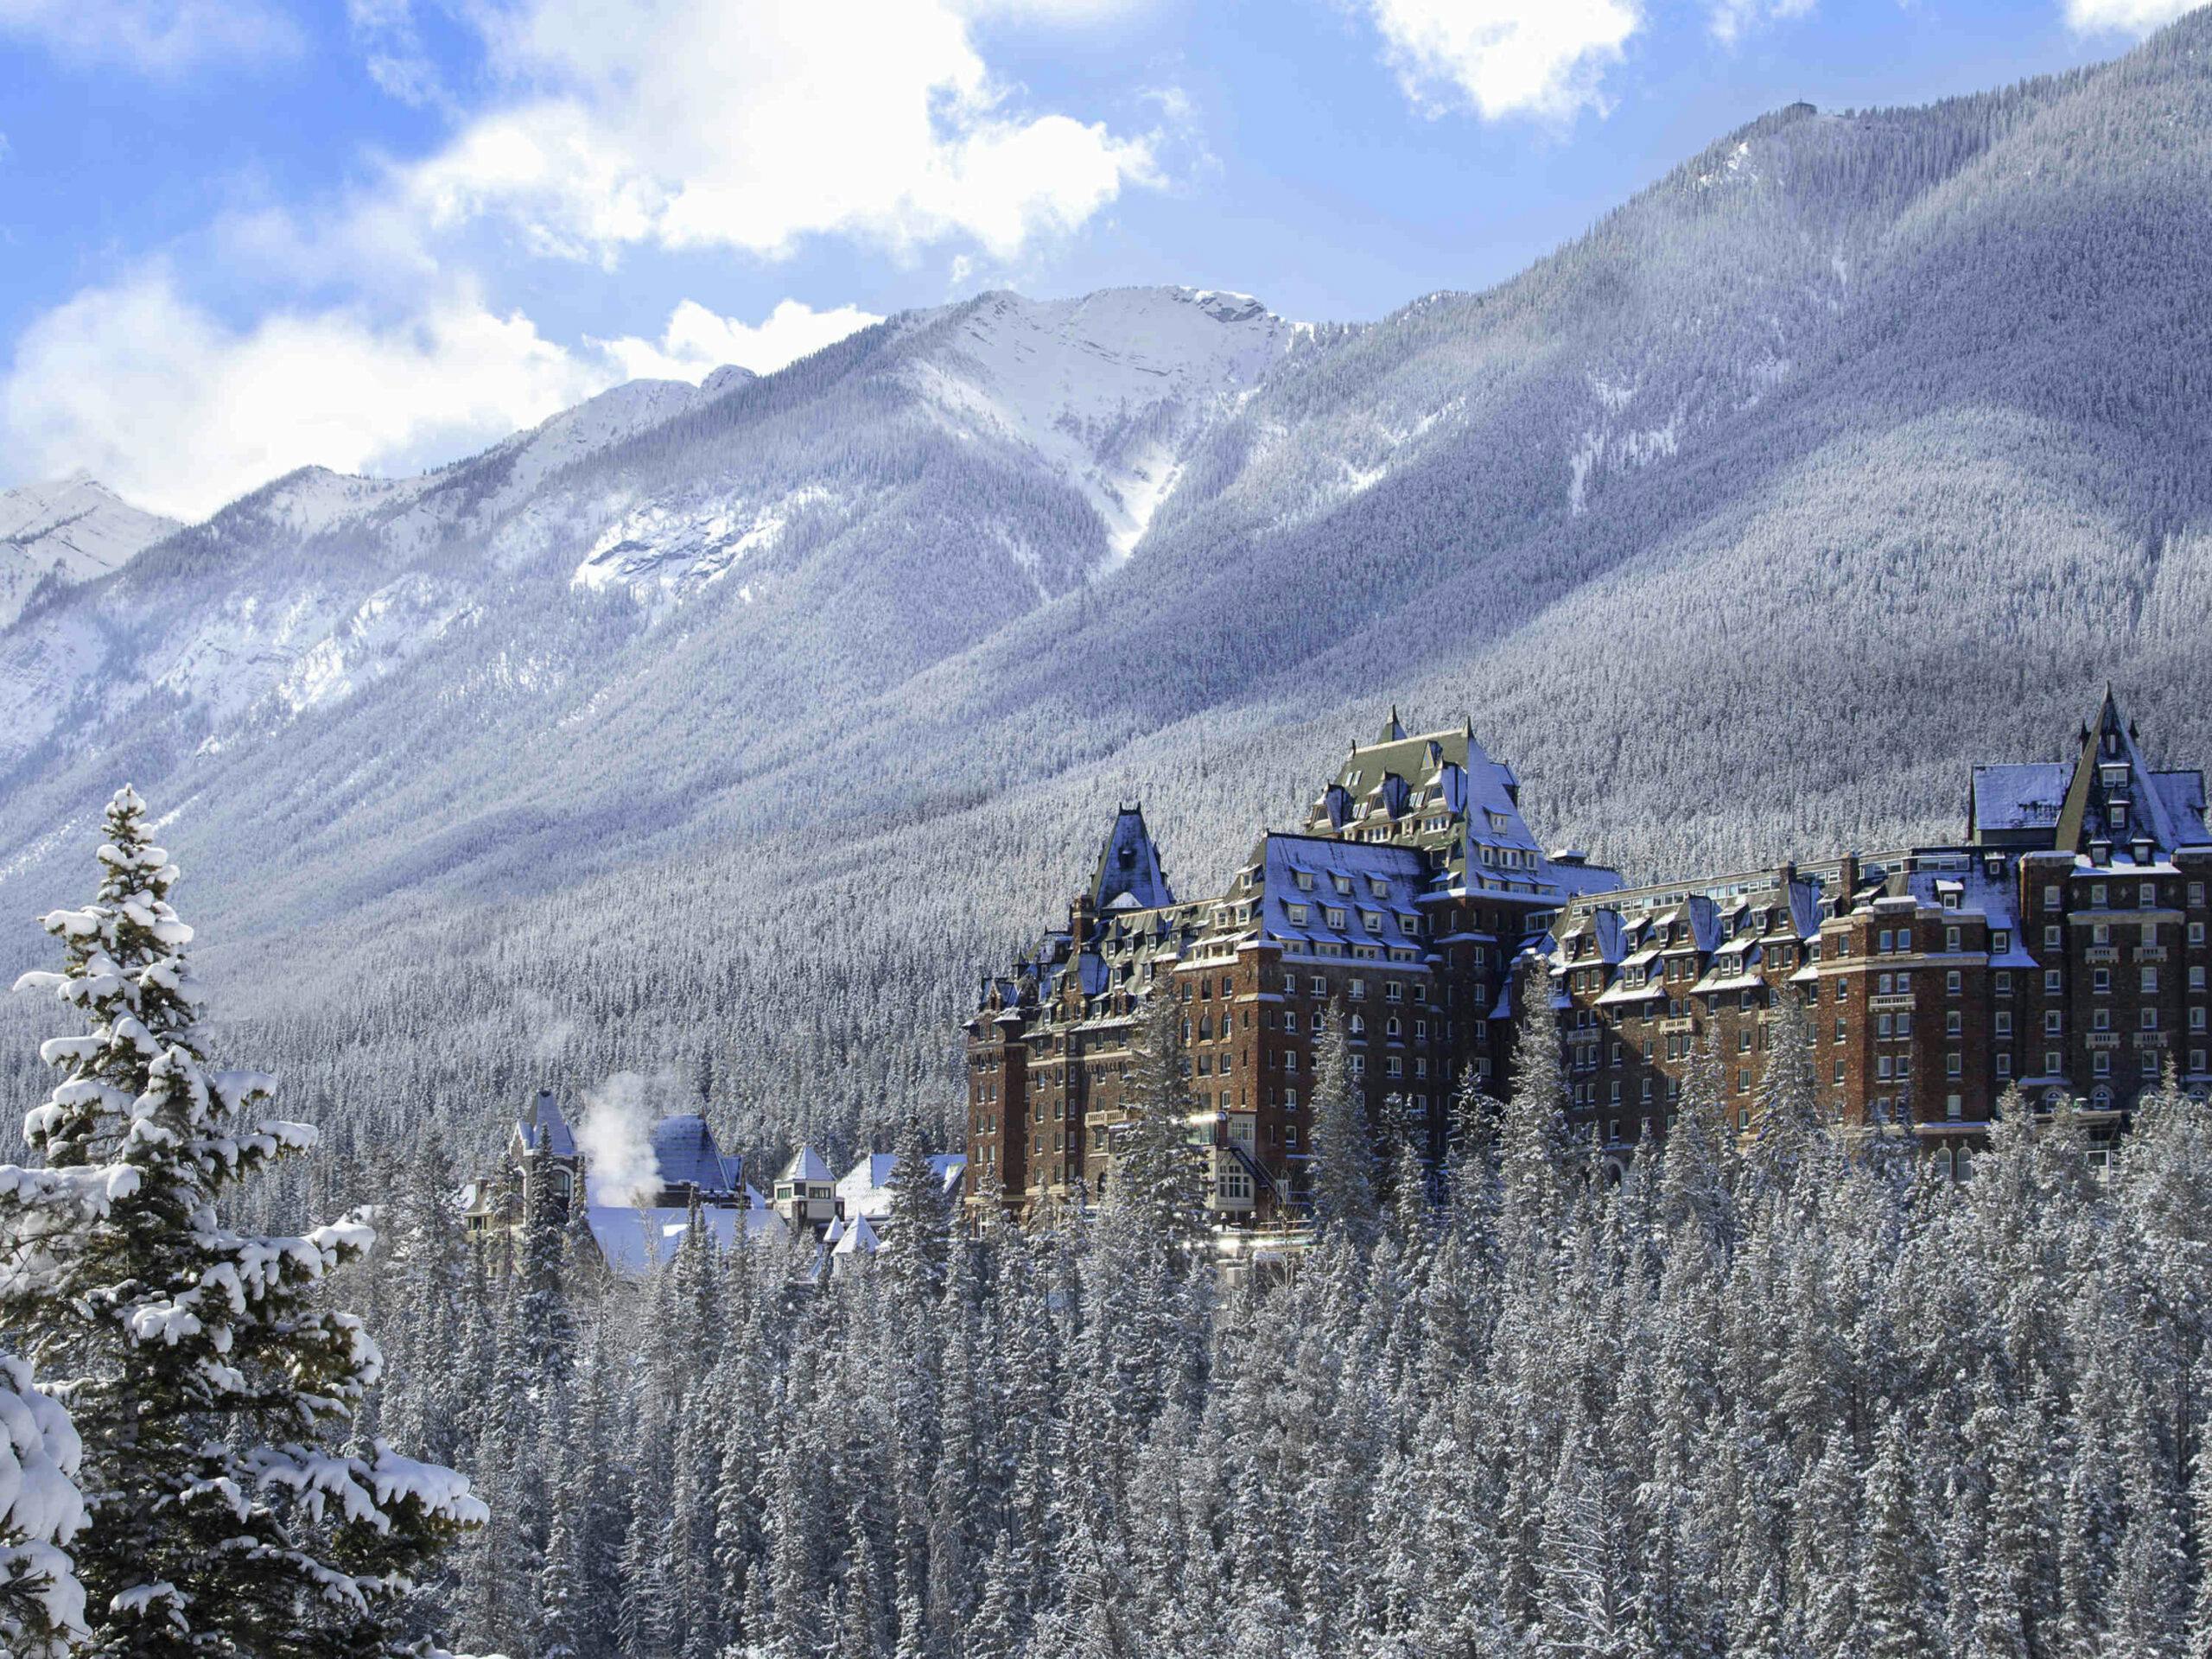 Fairmont Banff Springs, Luxury Hotels Canada